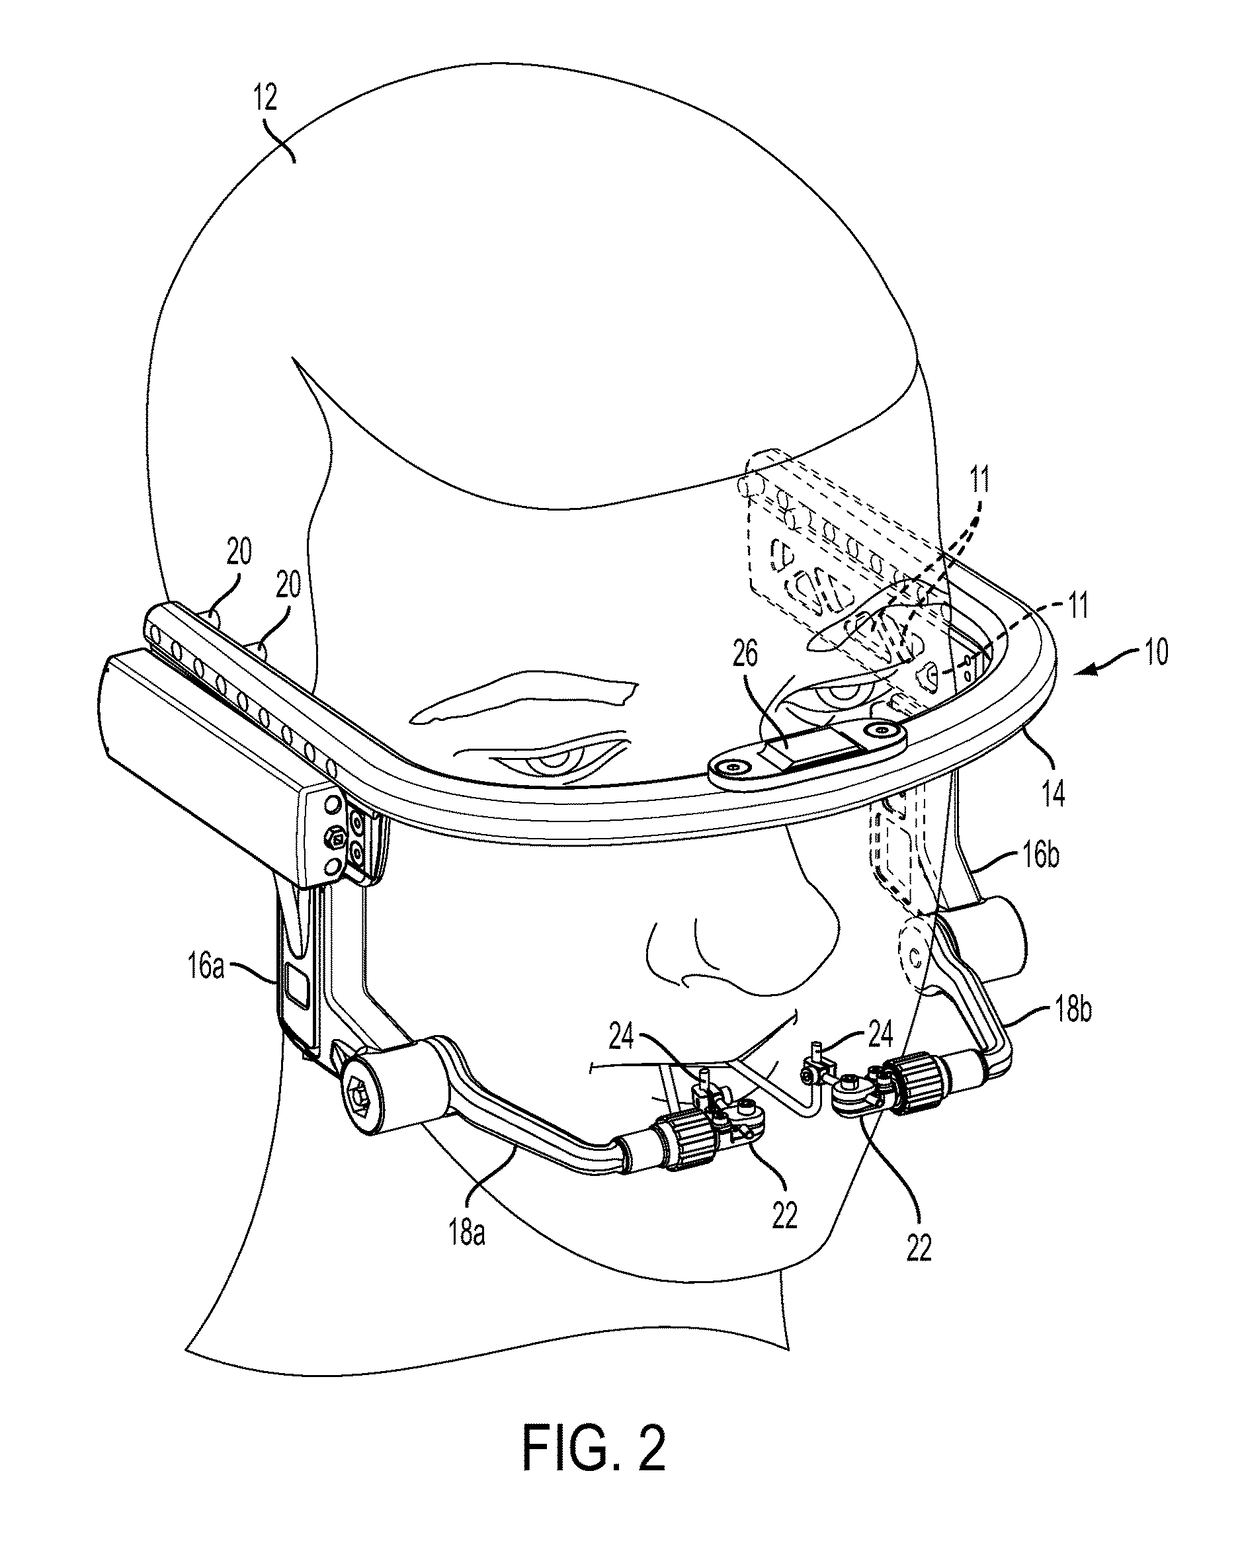 Craniofacial external distraction apparatus